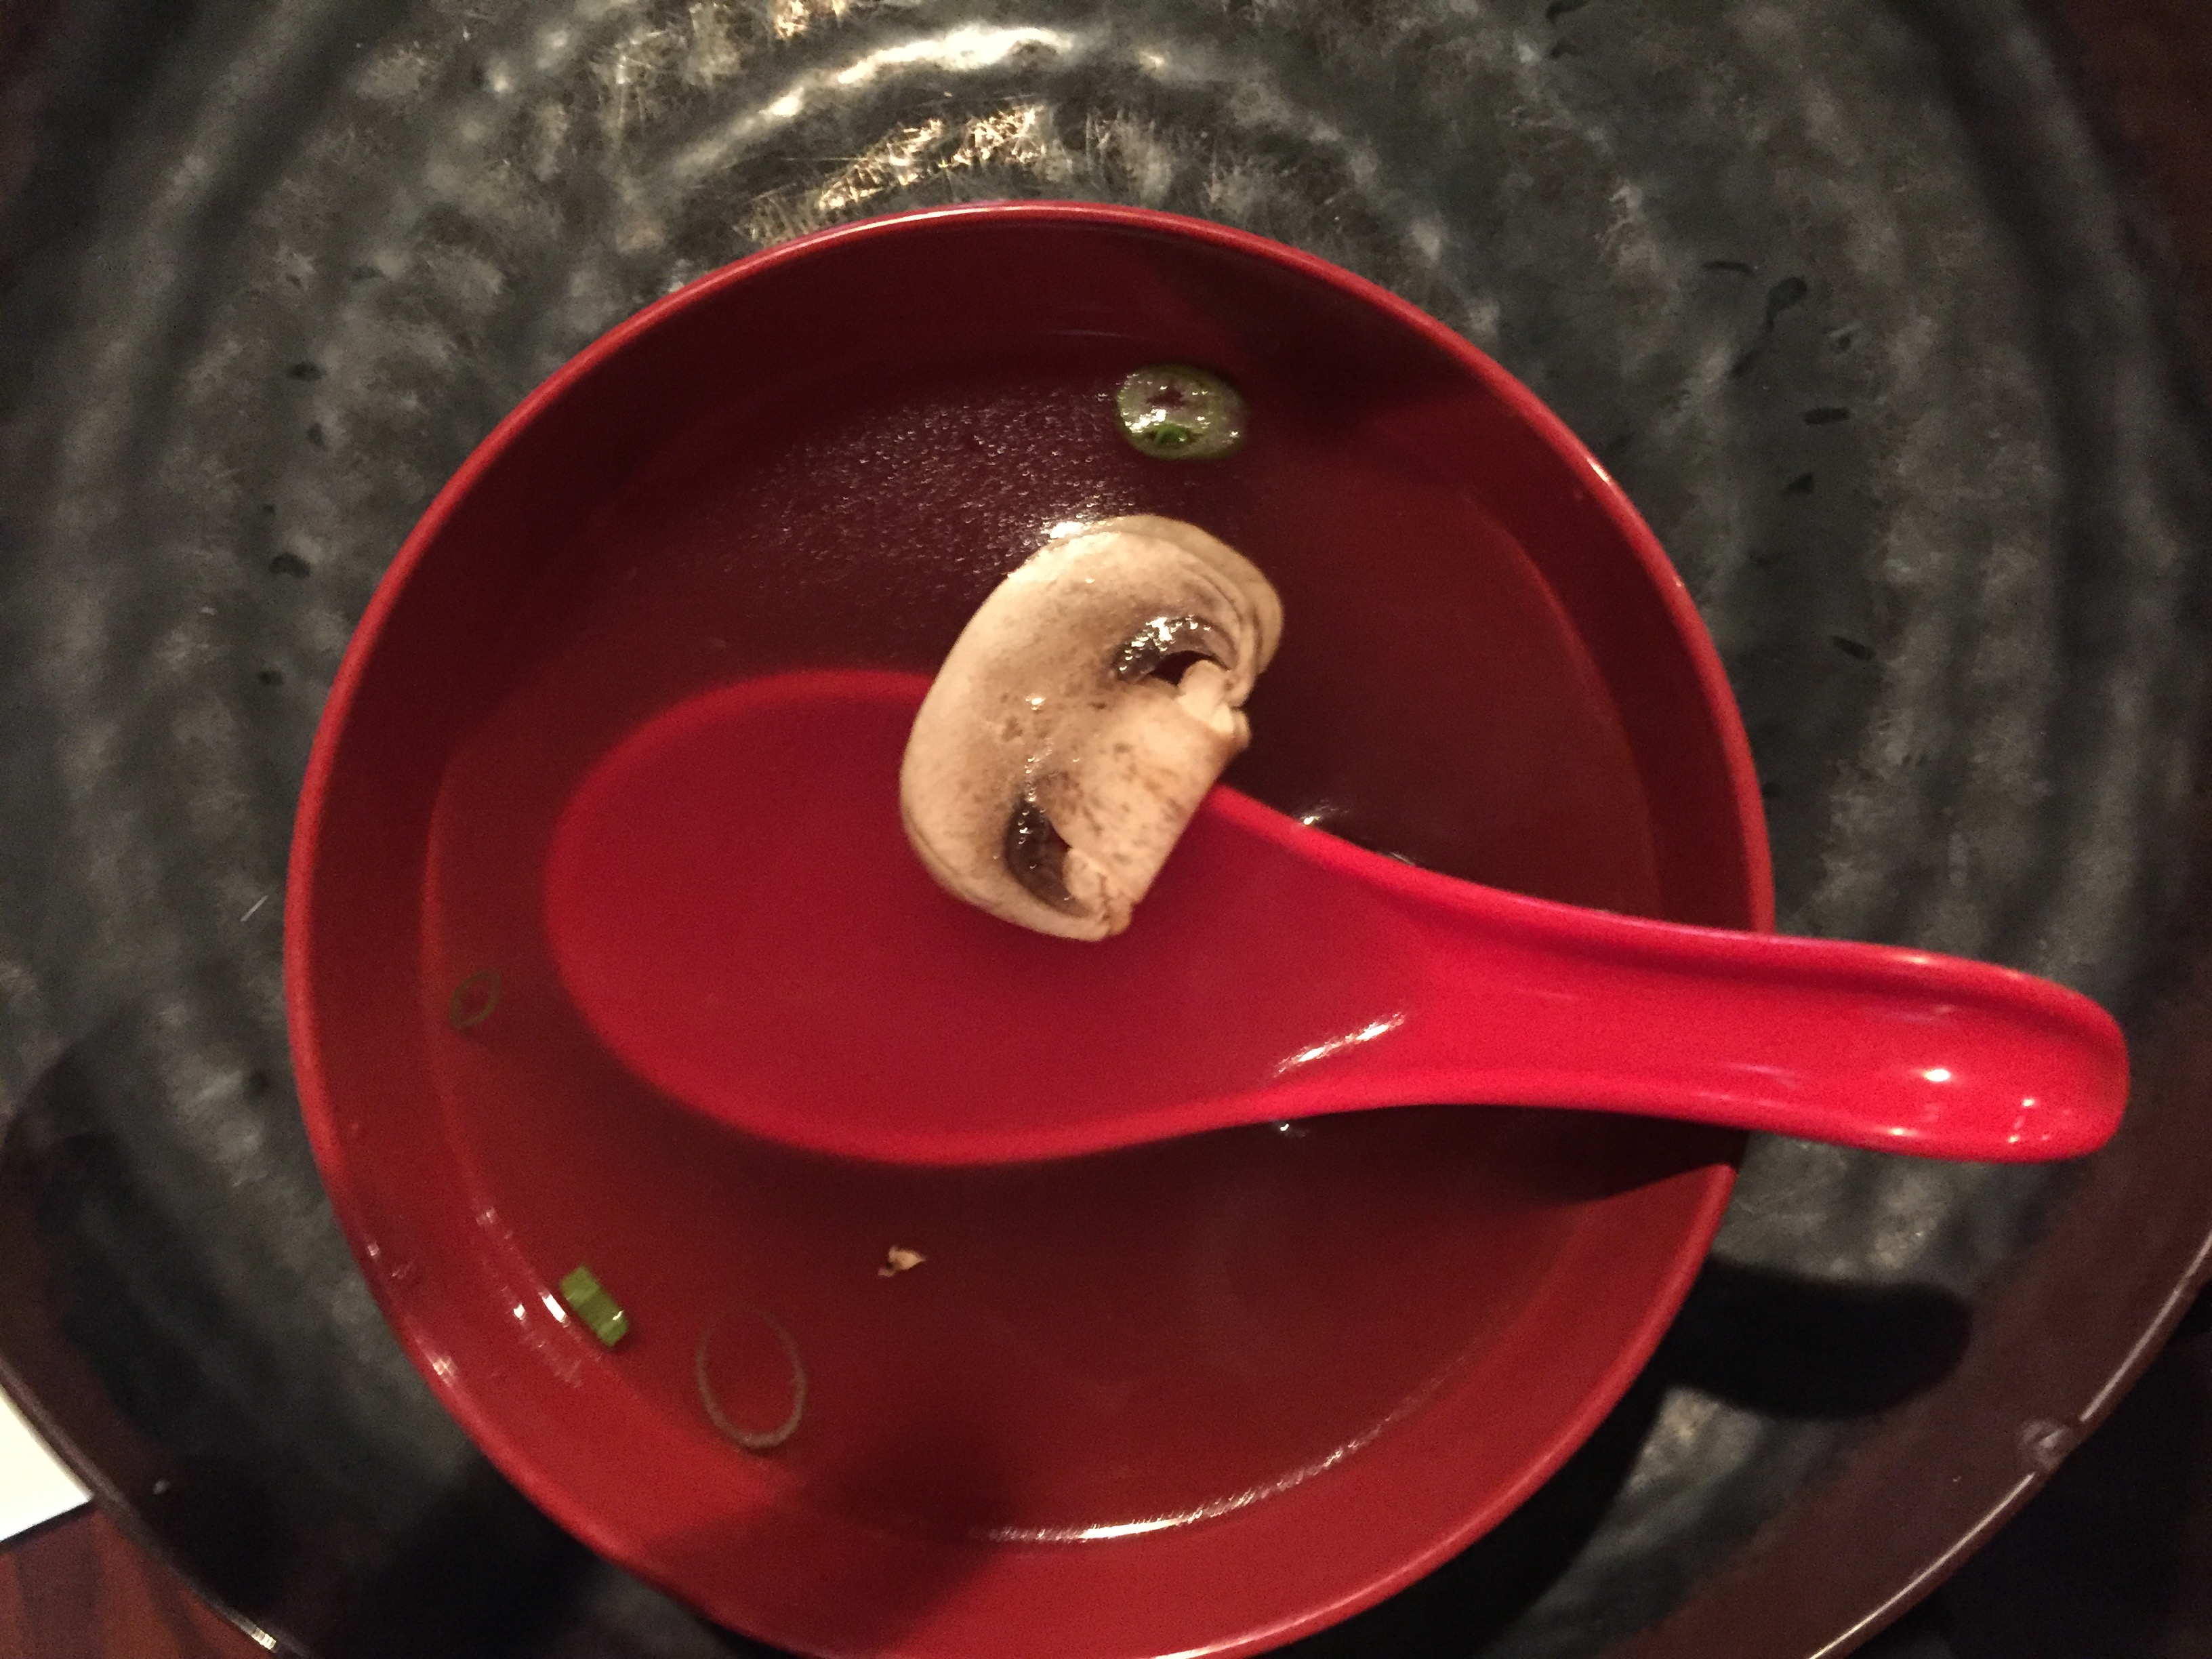 Miso Soup at Hananoki- Before